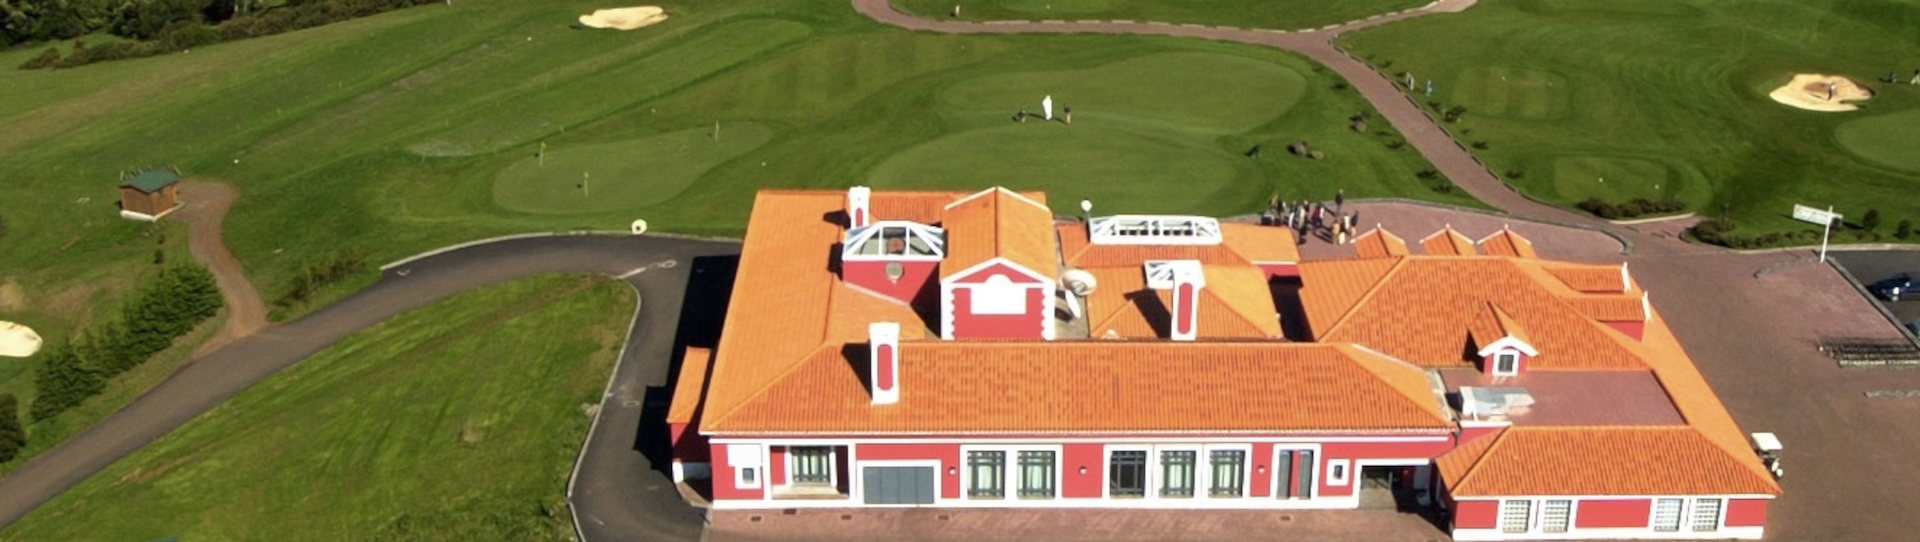 Portugal golf holidays - Santo da Serra Trio Experience w/ Buggy Included - Photo 2